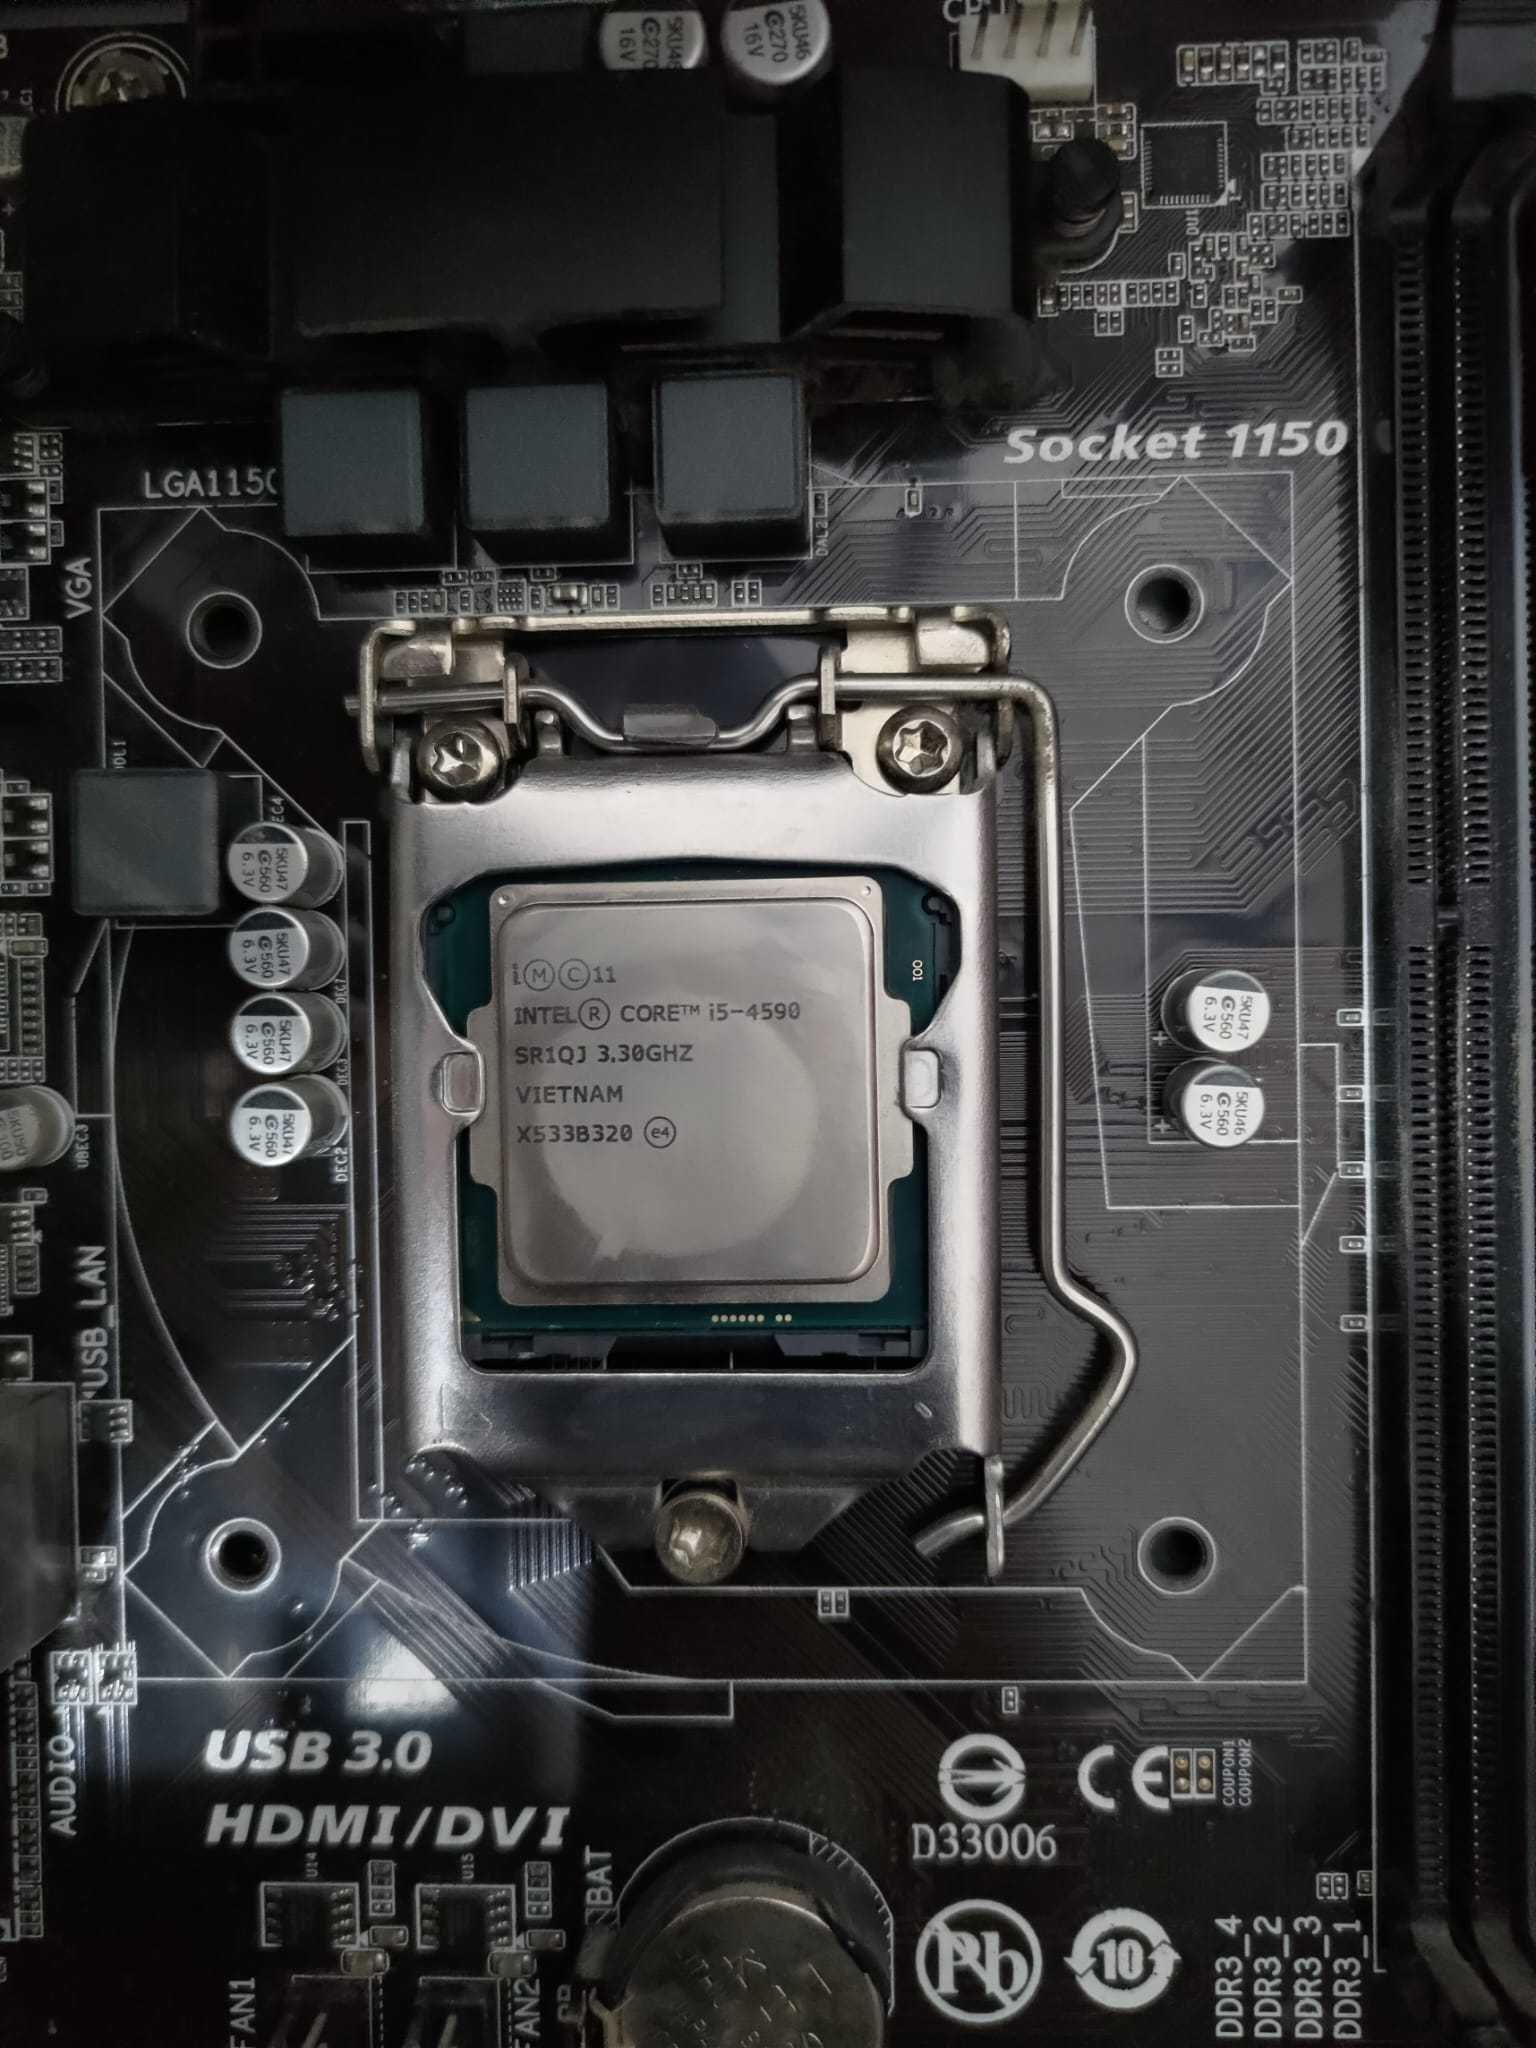 Procesor Intel Core I5 4590 3.30ghz